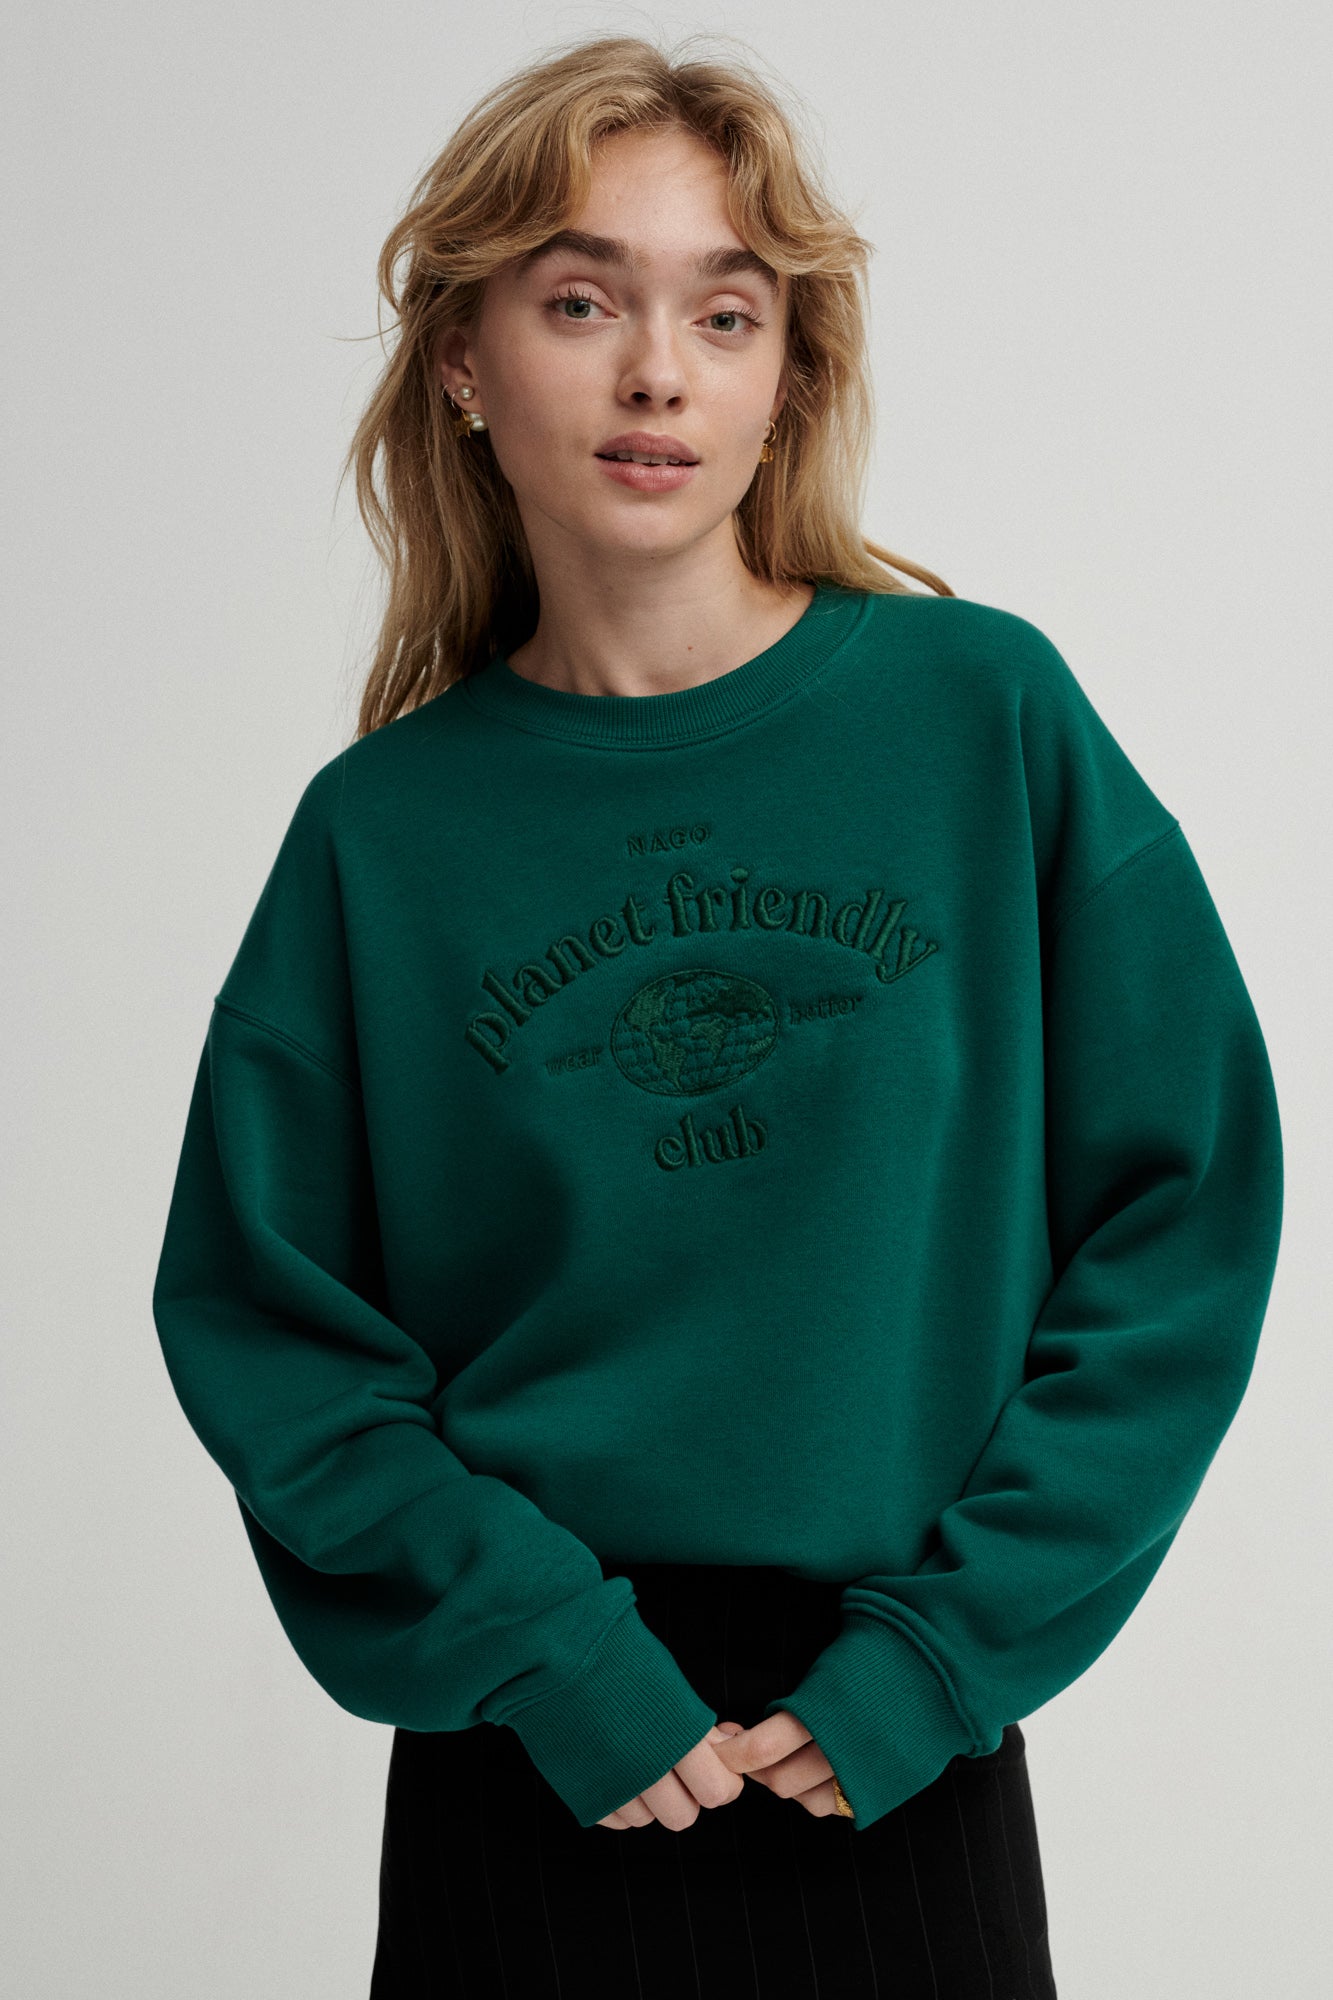 Sweatshirt in organic cotton / 17 / 16 / vintage green / planet firendly